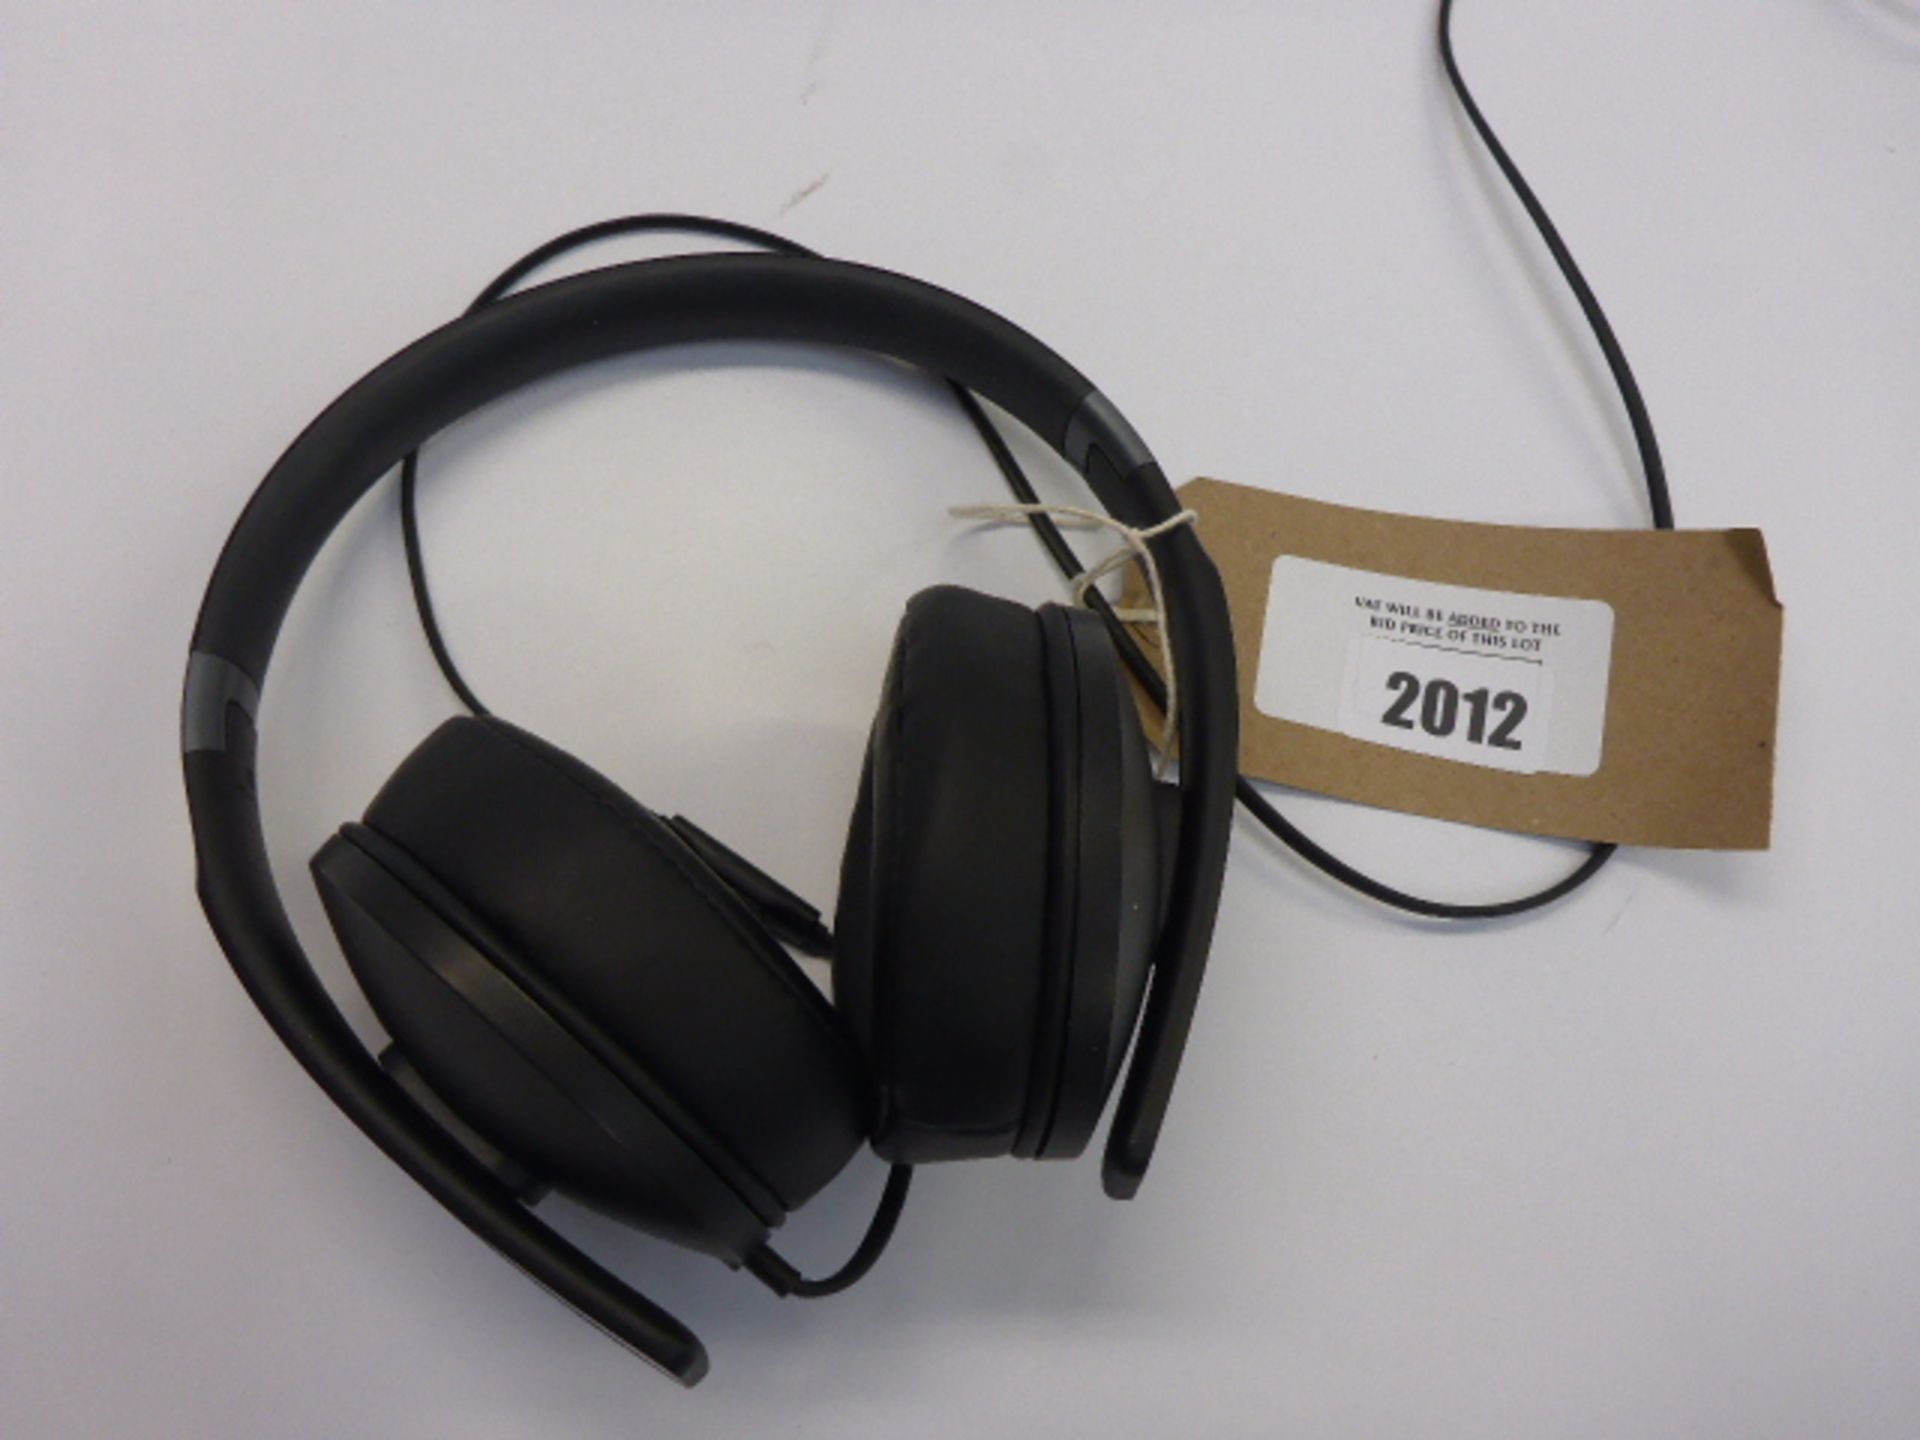 Sennheiser HD4.20s headphones.